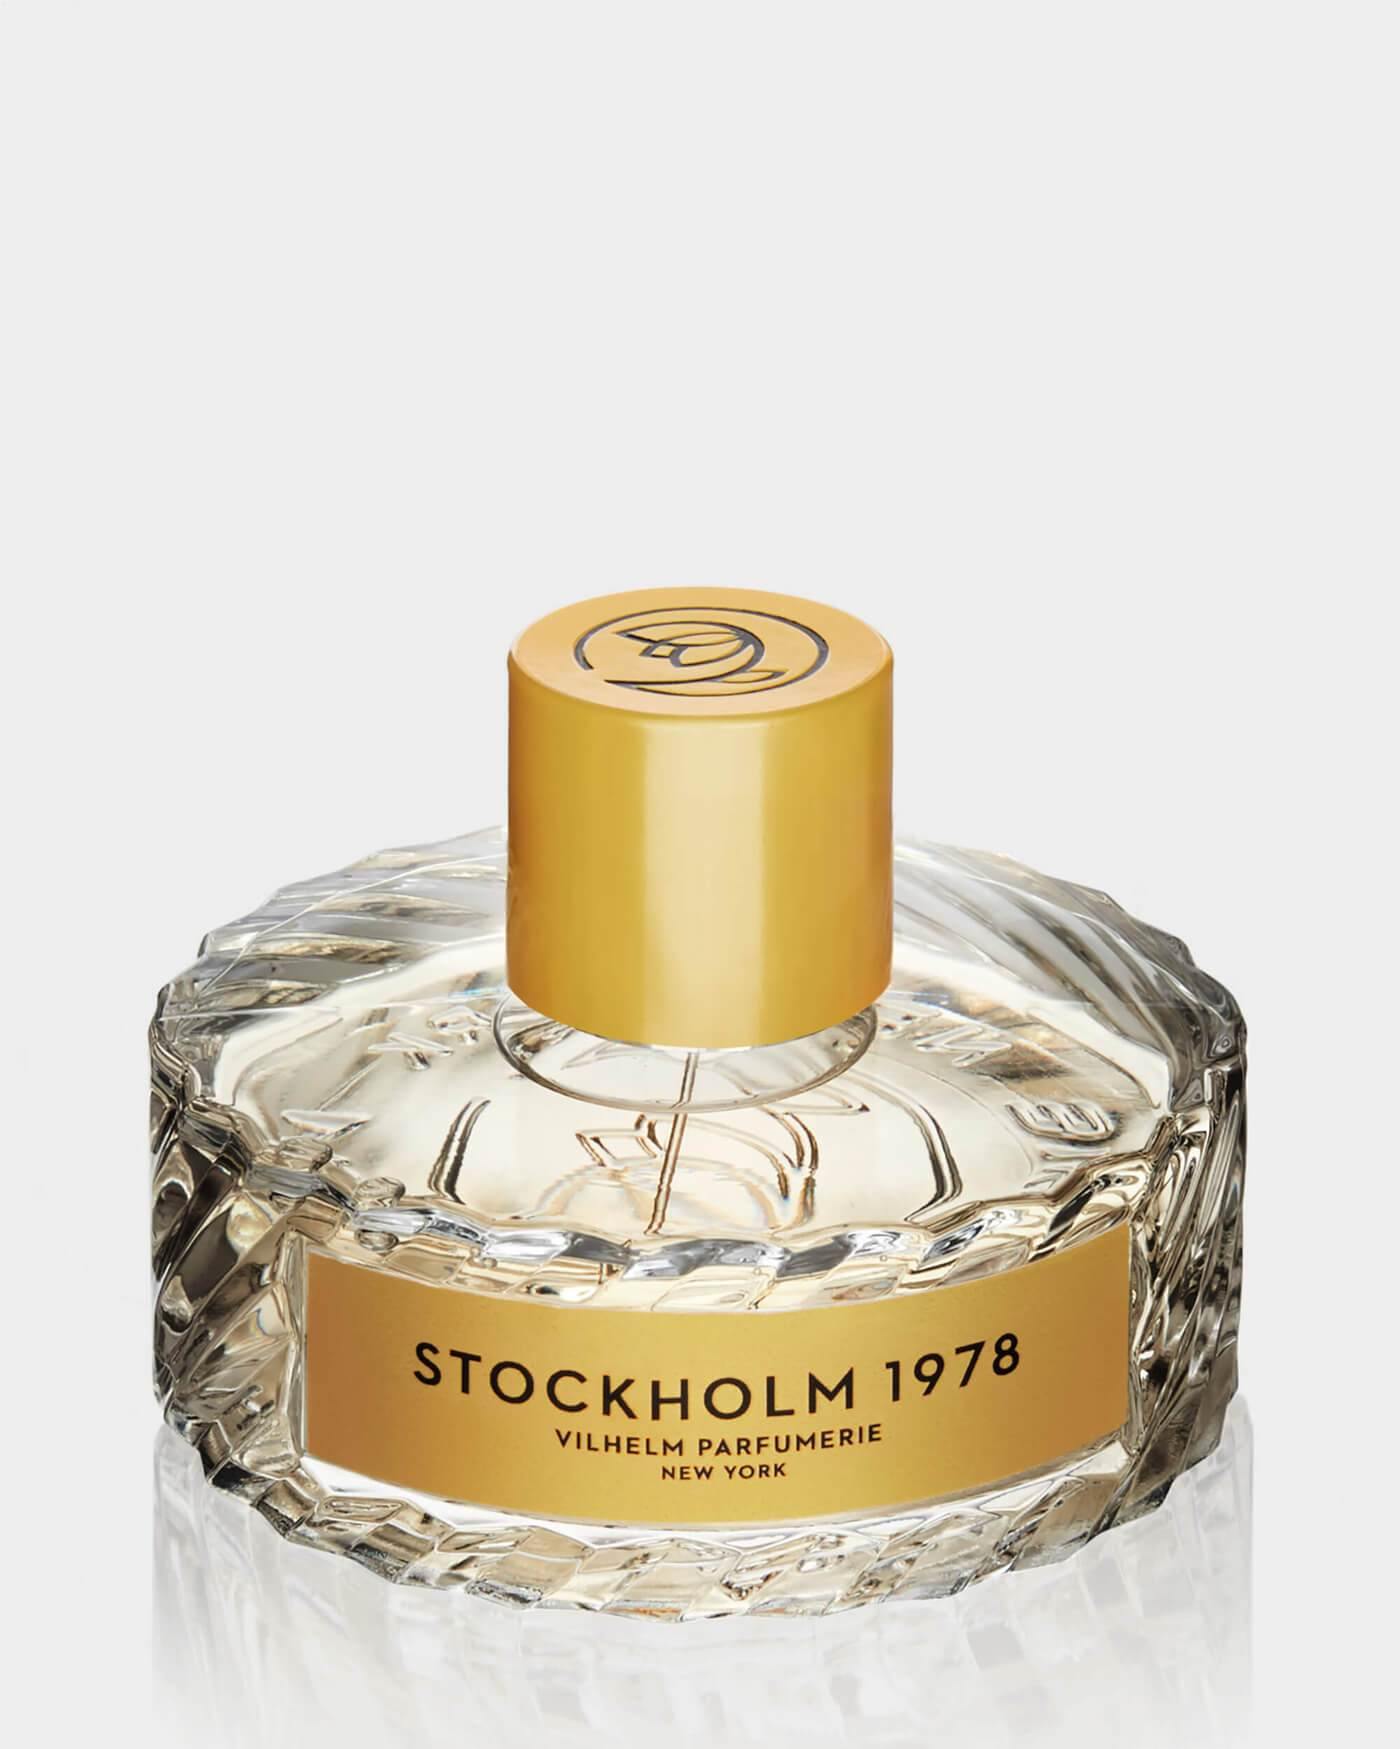 STOCKHOLM 1978 - Vilhelm Parfumerie